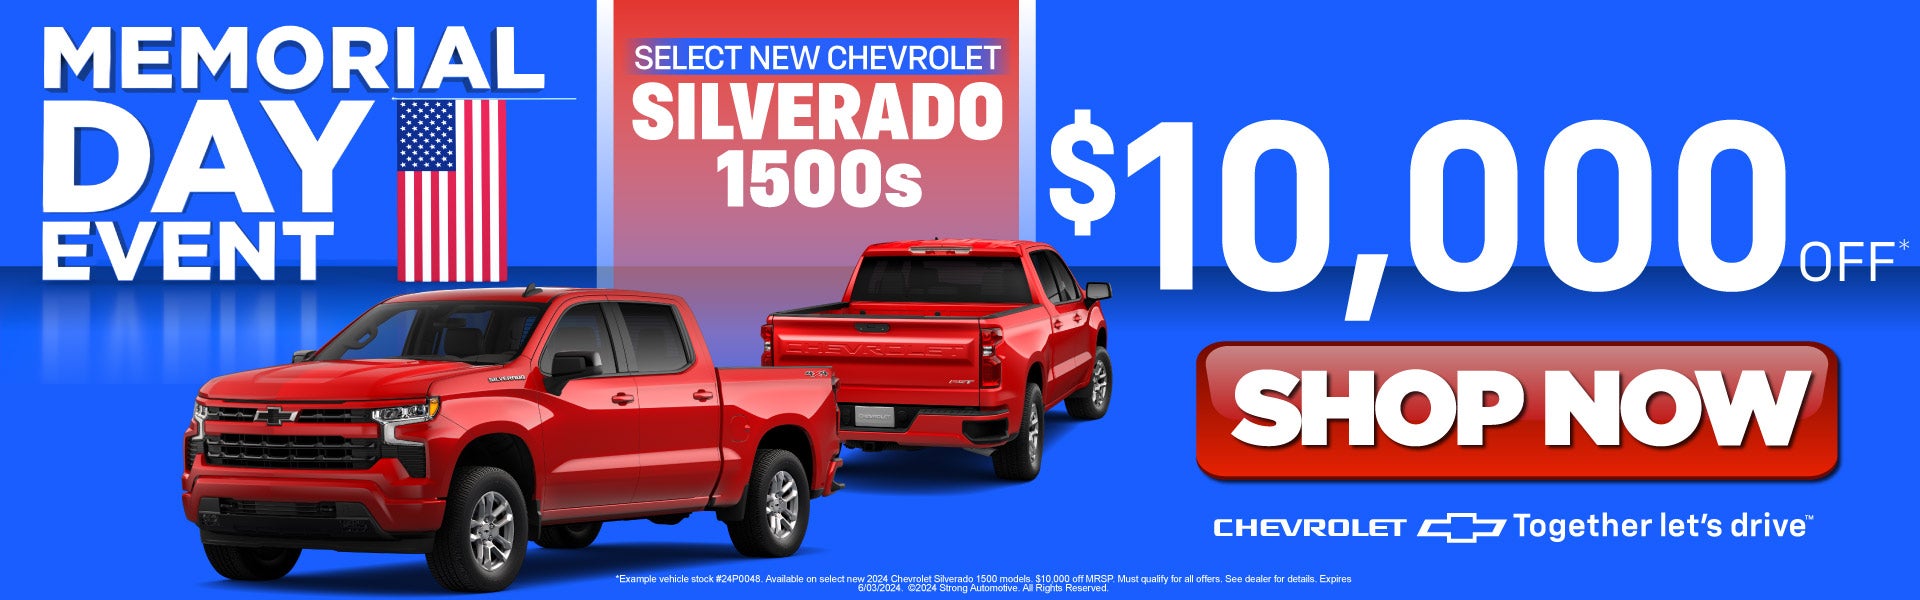 Select new Chevrolet Silverado 1500s 10,000 off | shop now